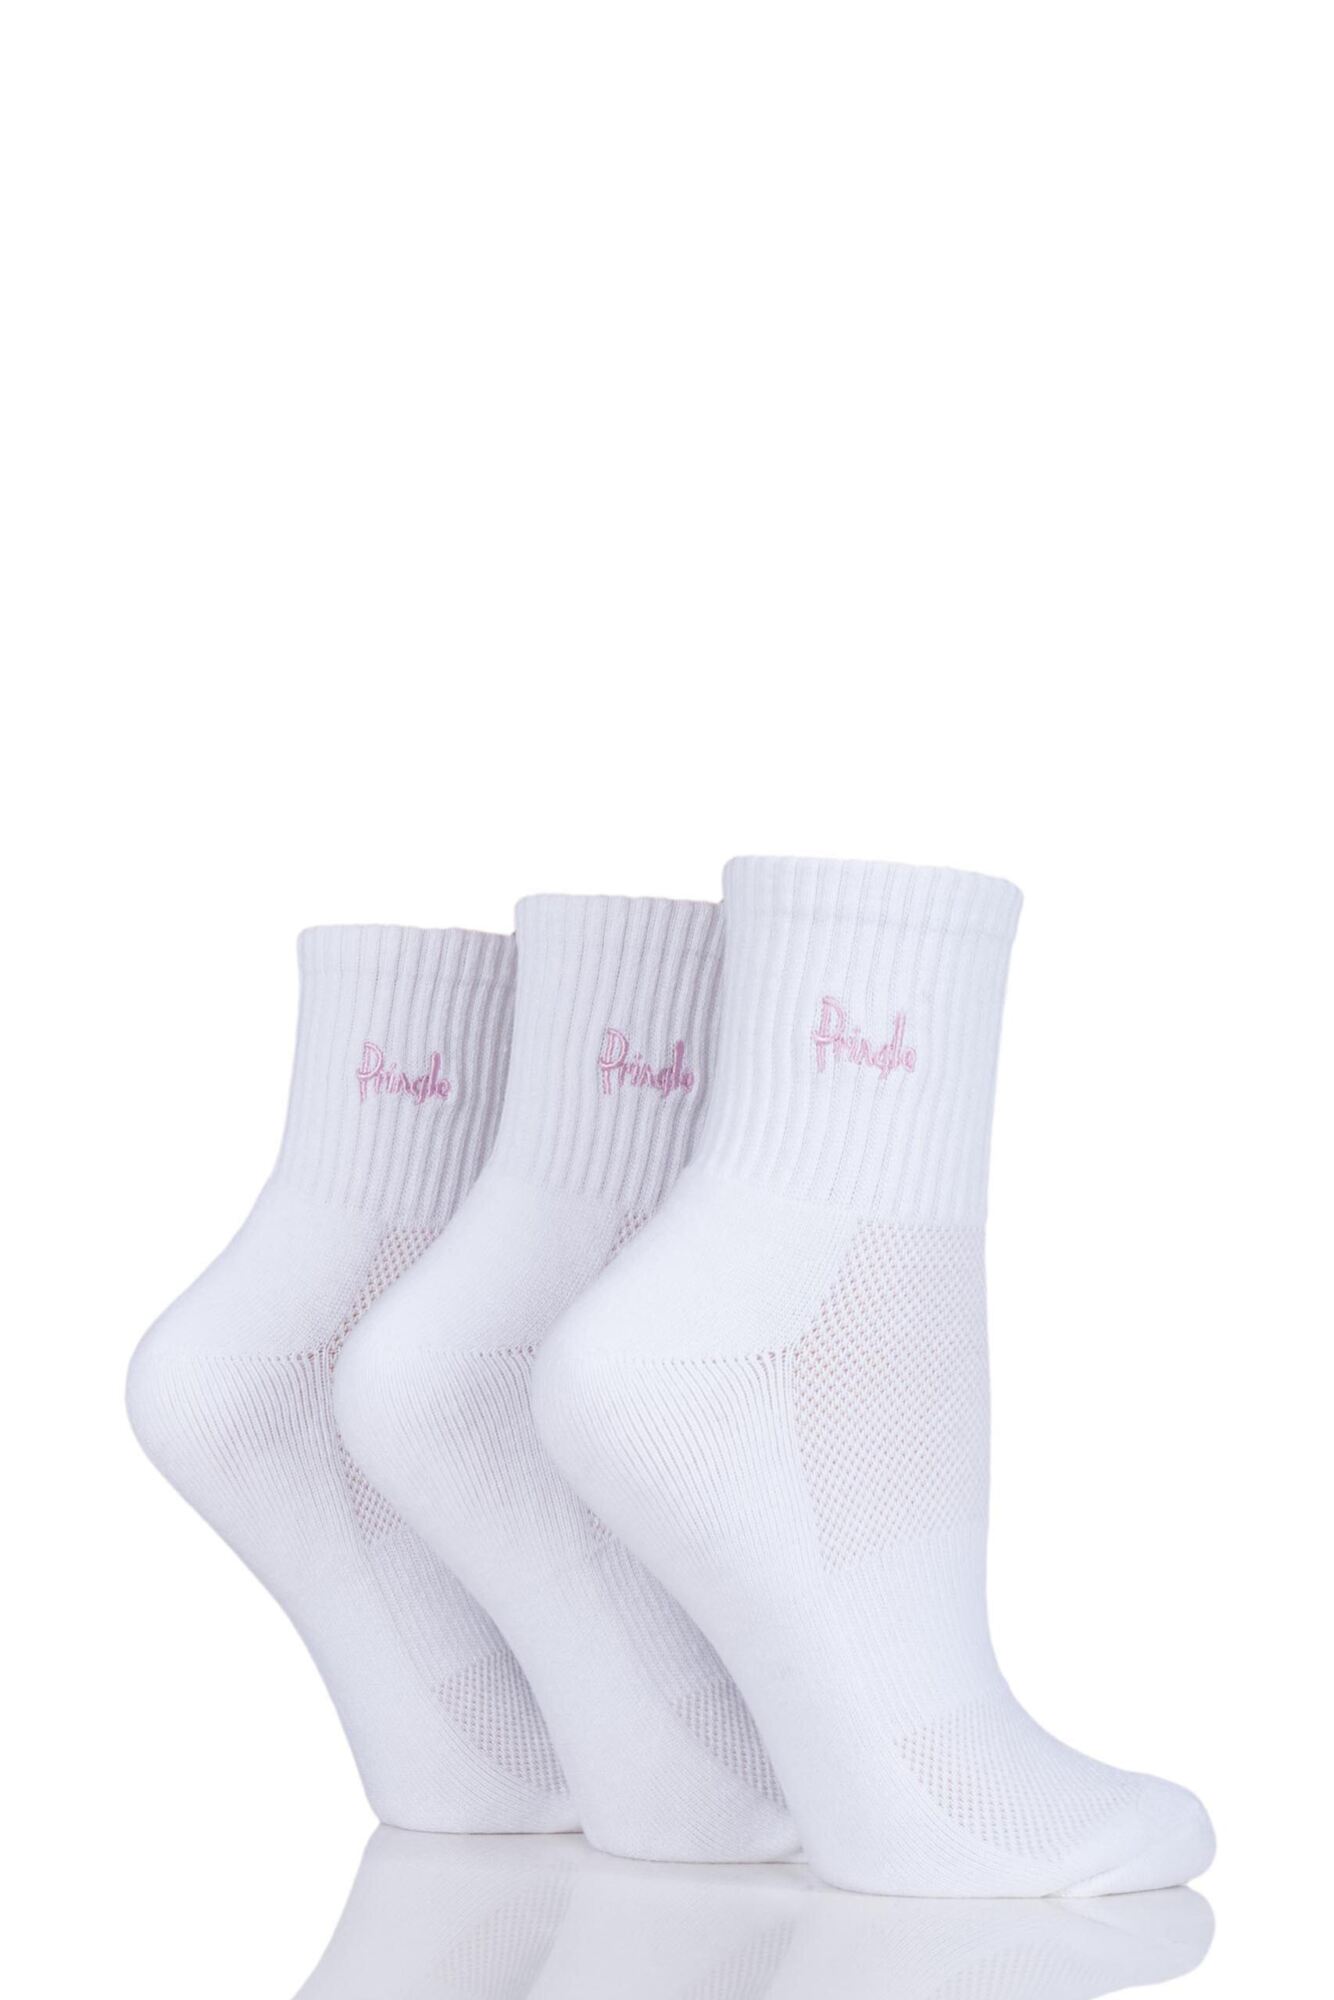 Ladies Pringle Lyndsey Cushioned Sport Socks | SOCKSHOP